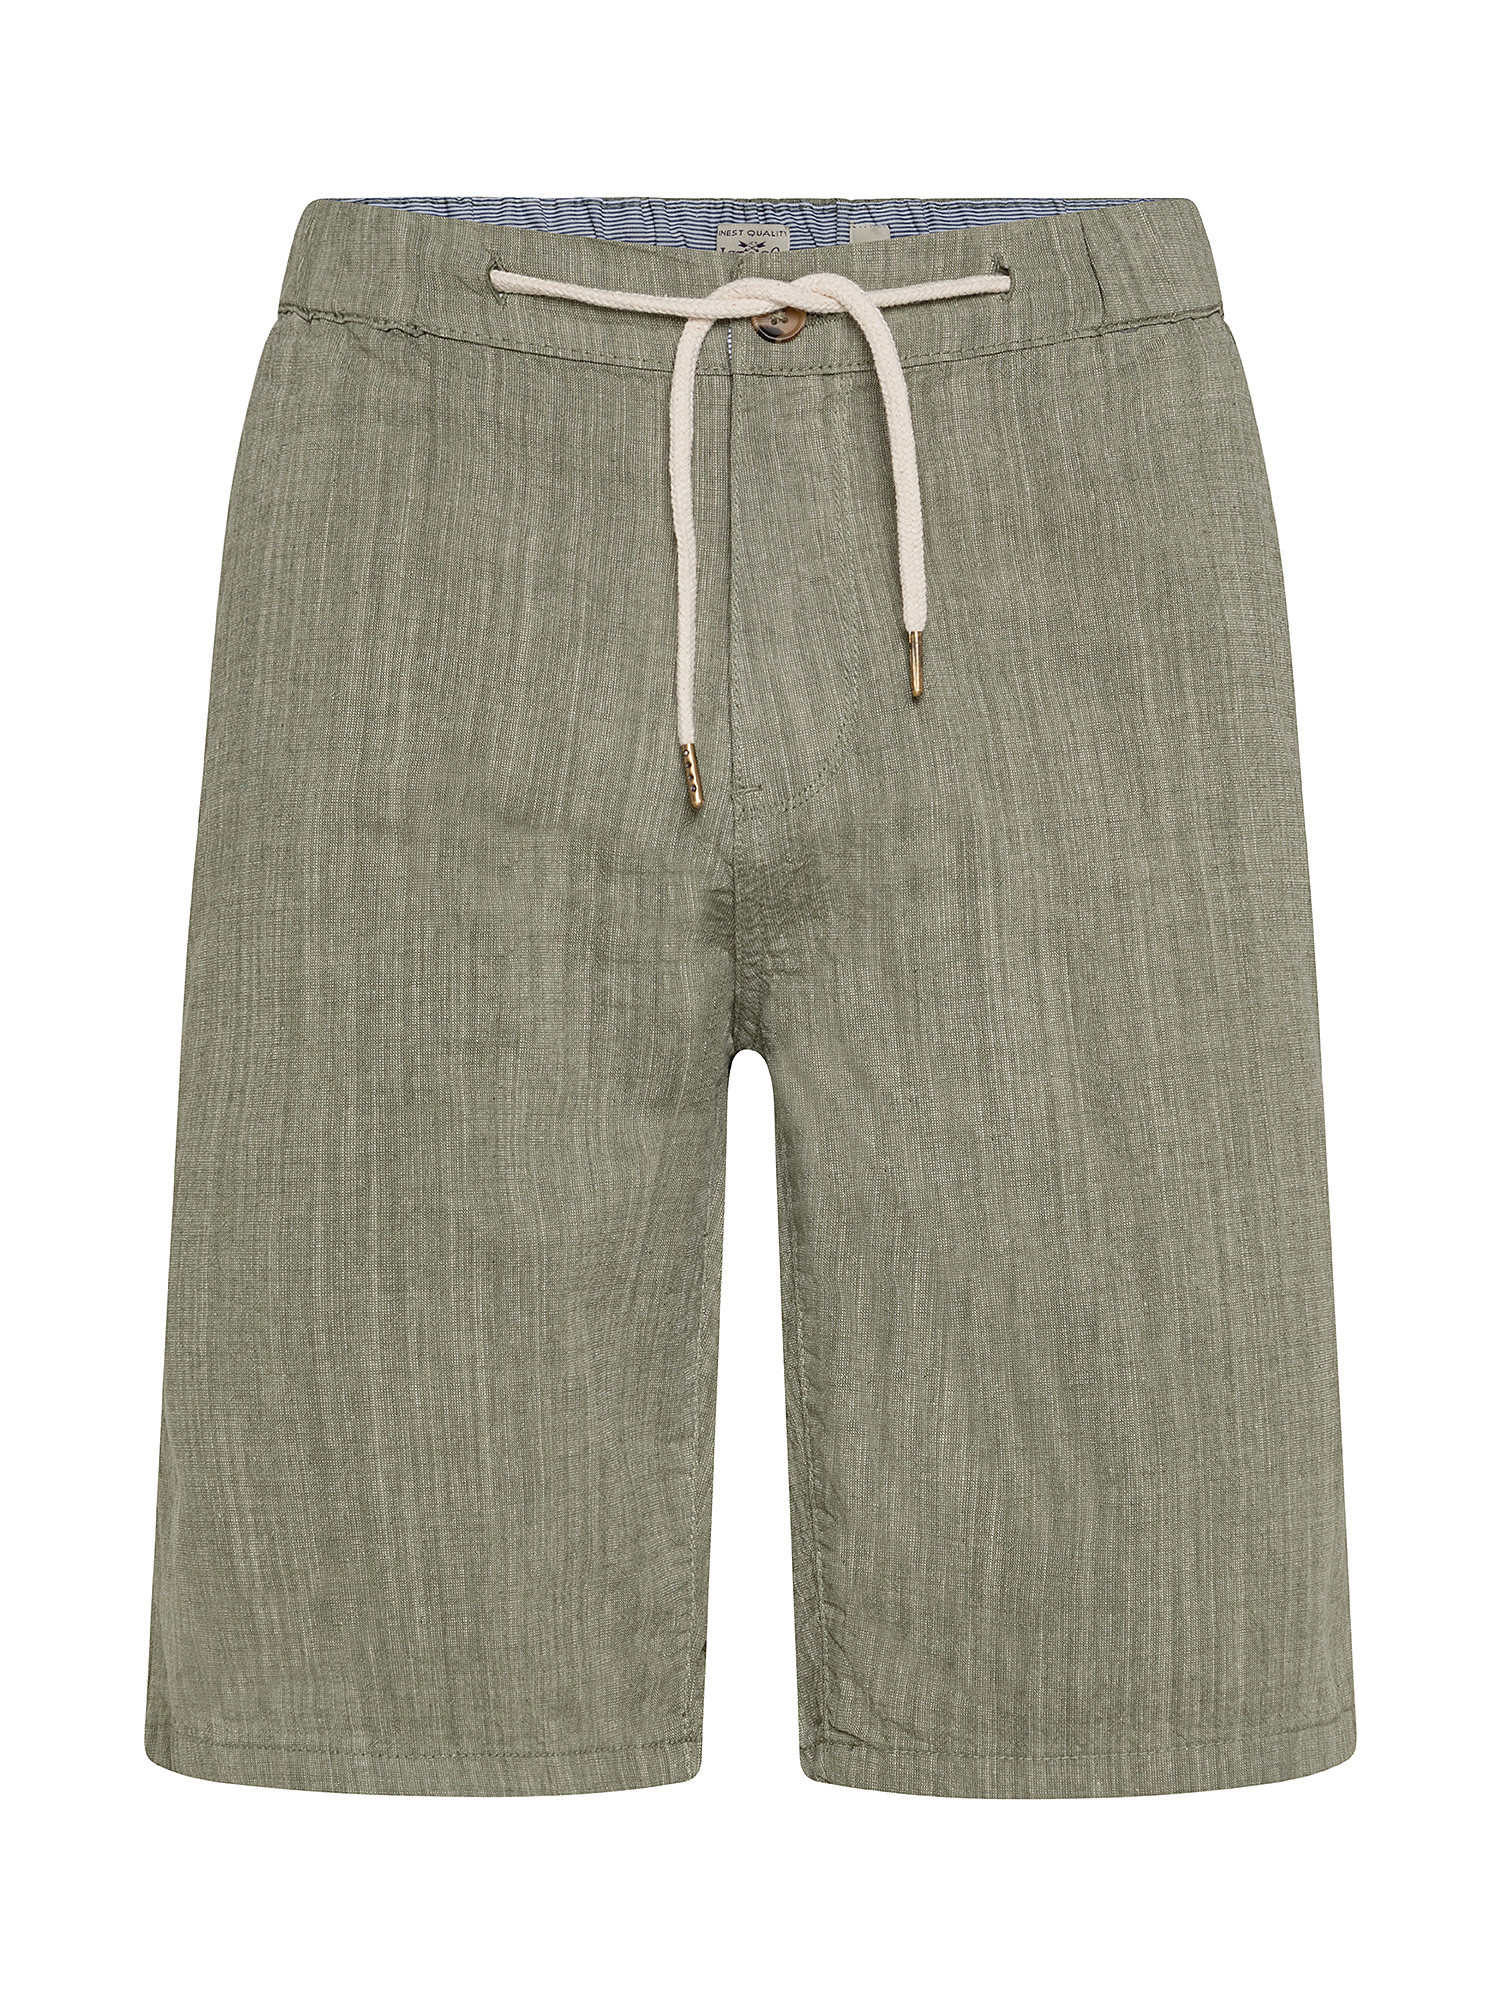 Bermuda shorts with drawstring at the waist, Green, large image number 0